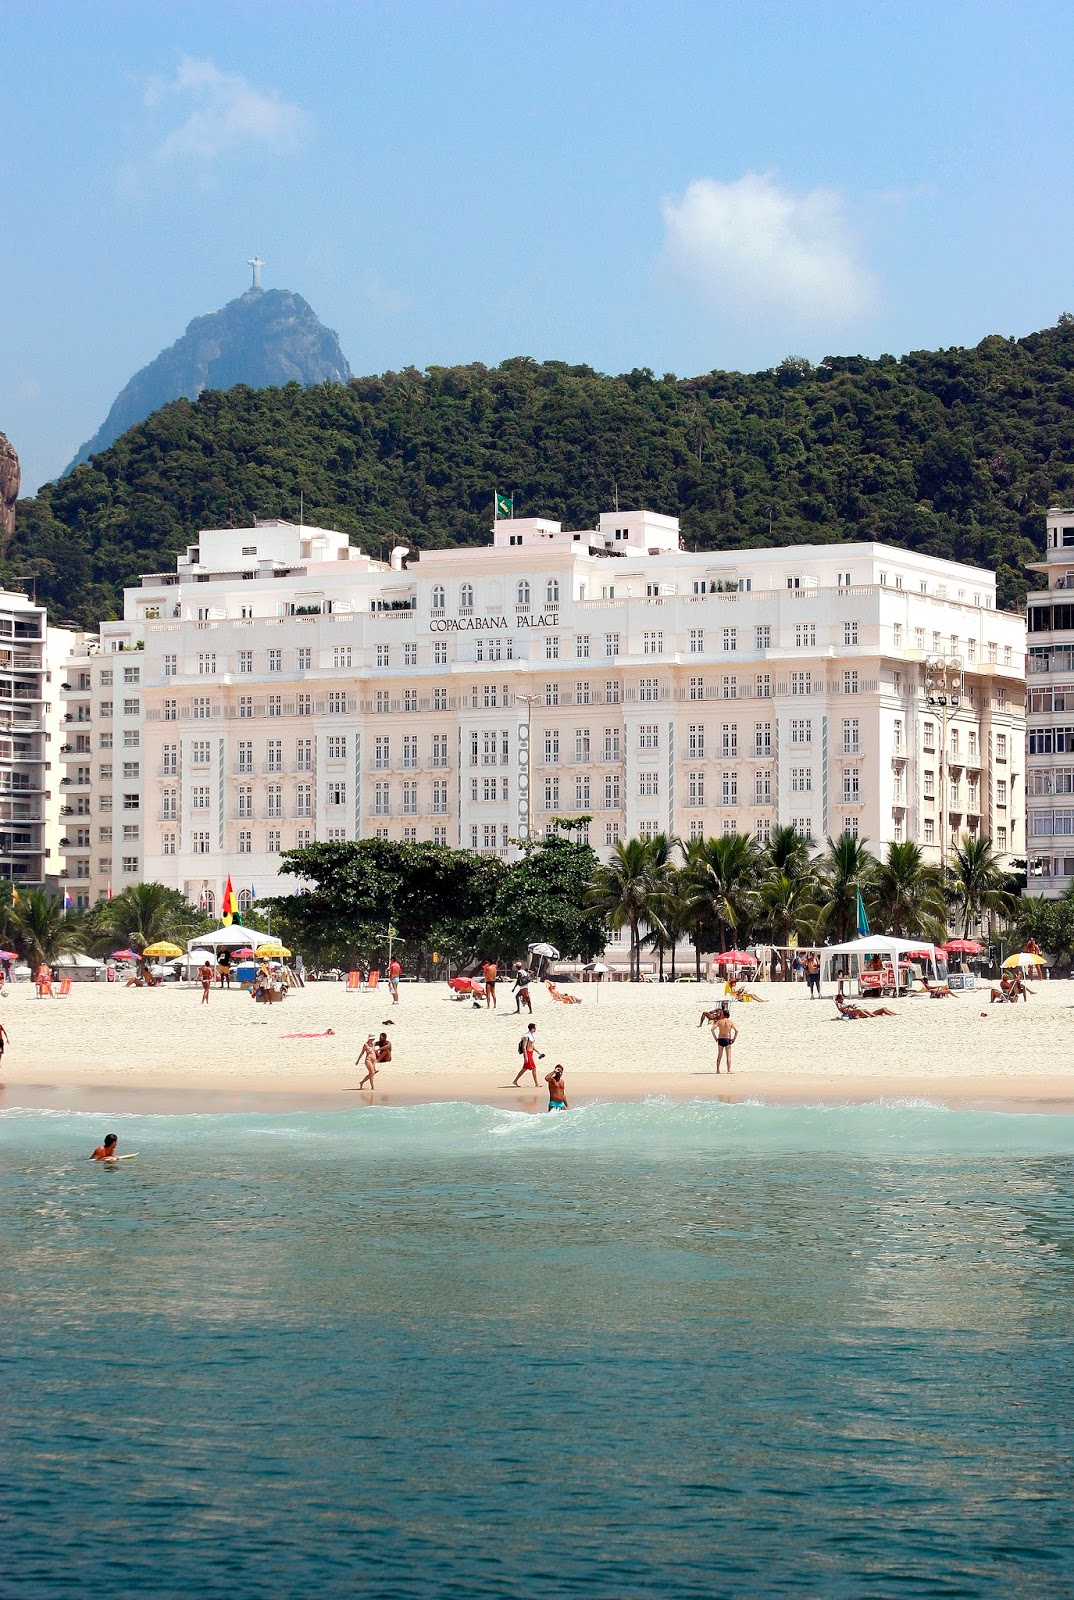 Copacabana Palace Hotel